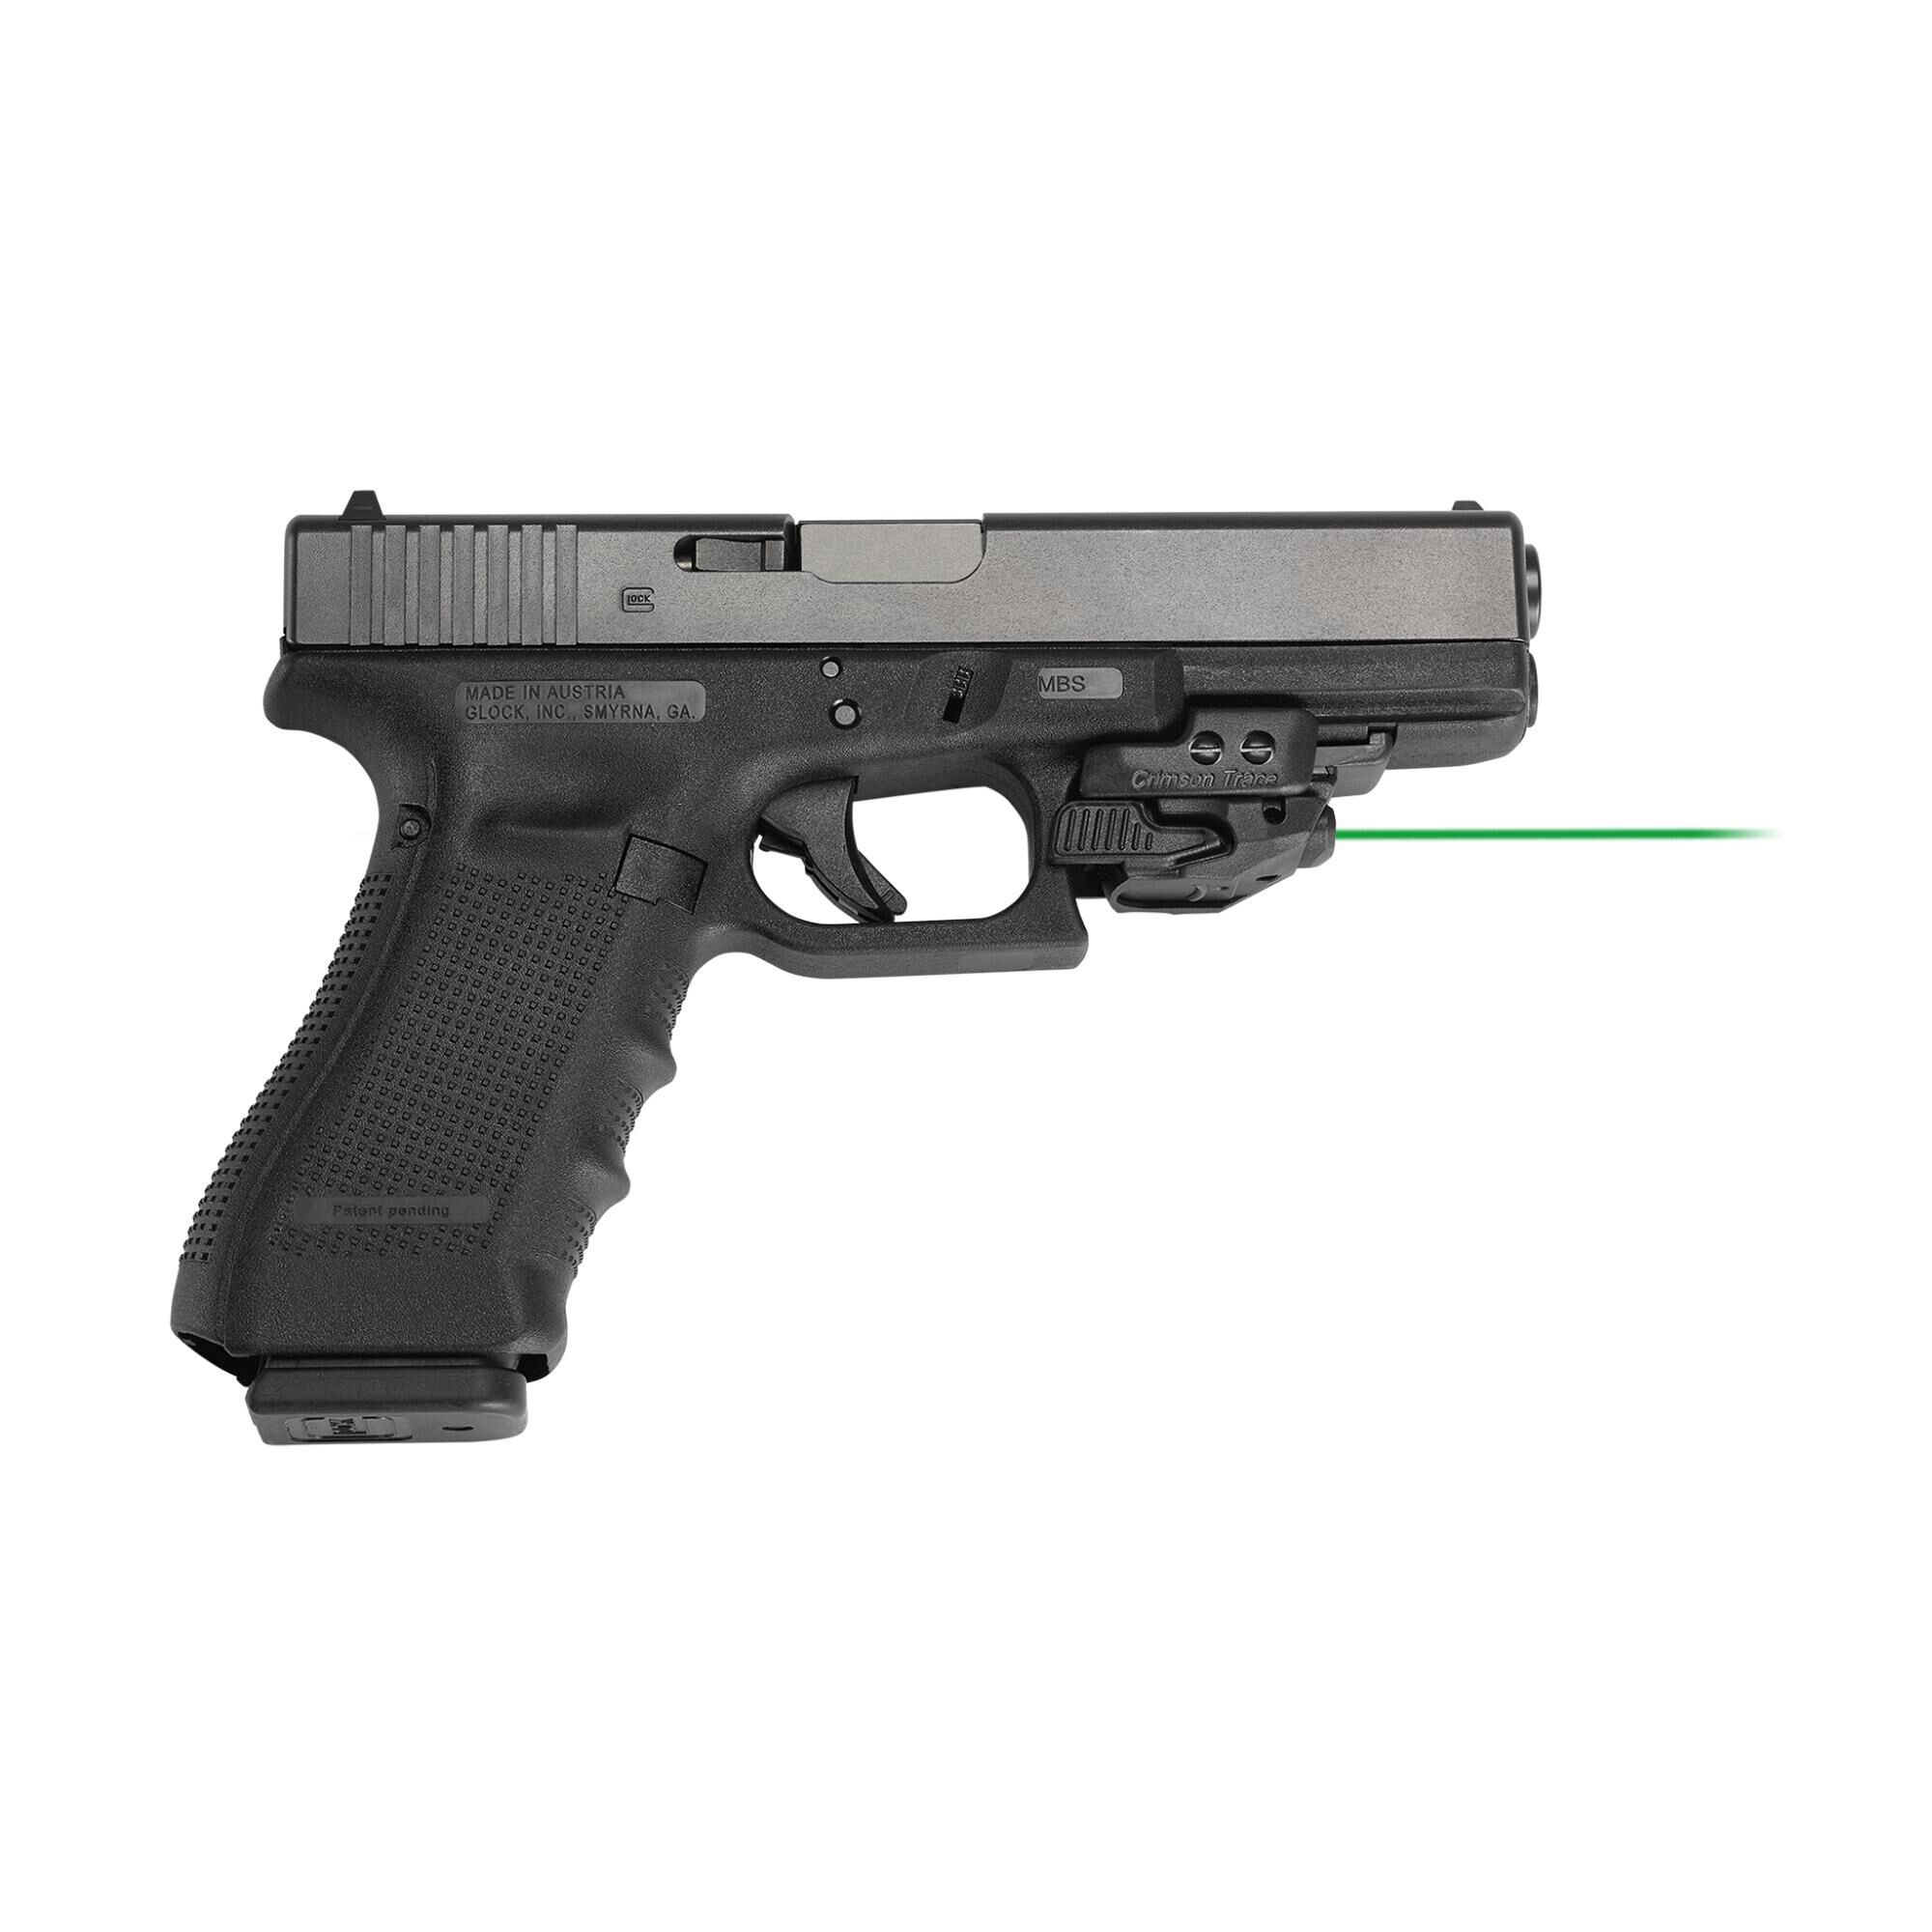 Ultra COMPACT Pistol Green Laser Sight for 45acp Taurus Berreta Px4 